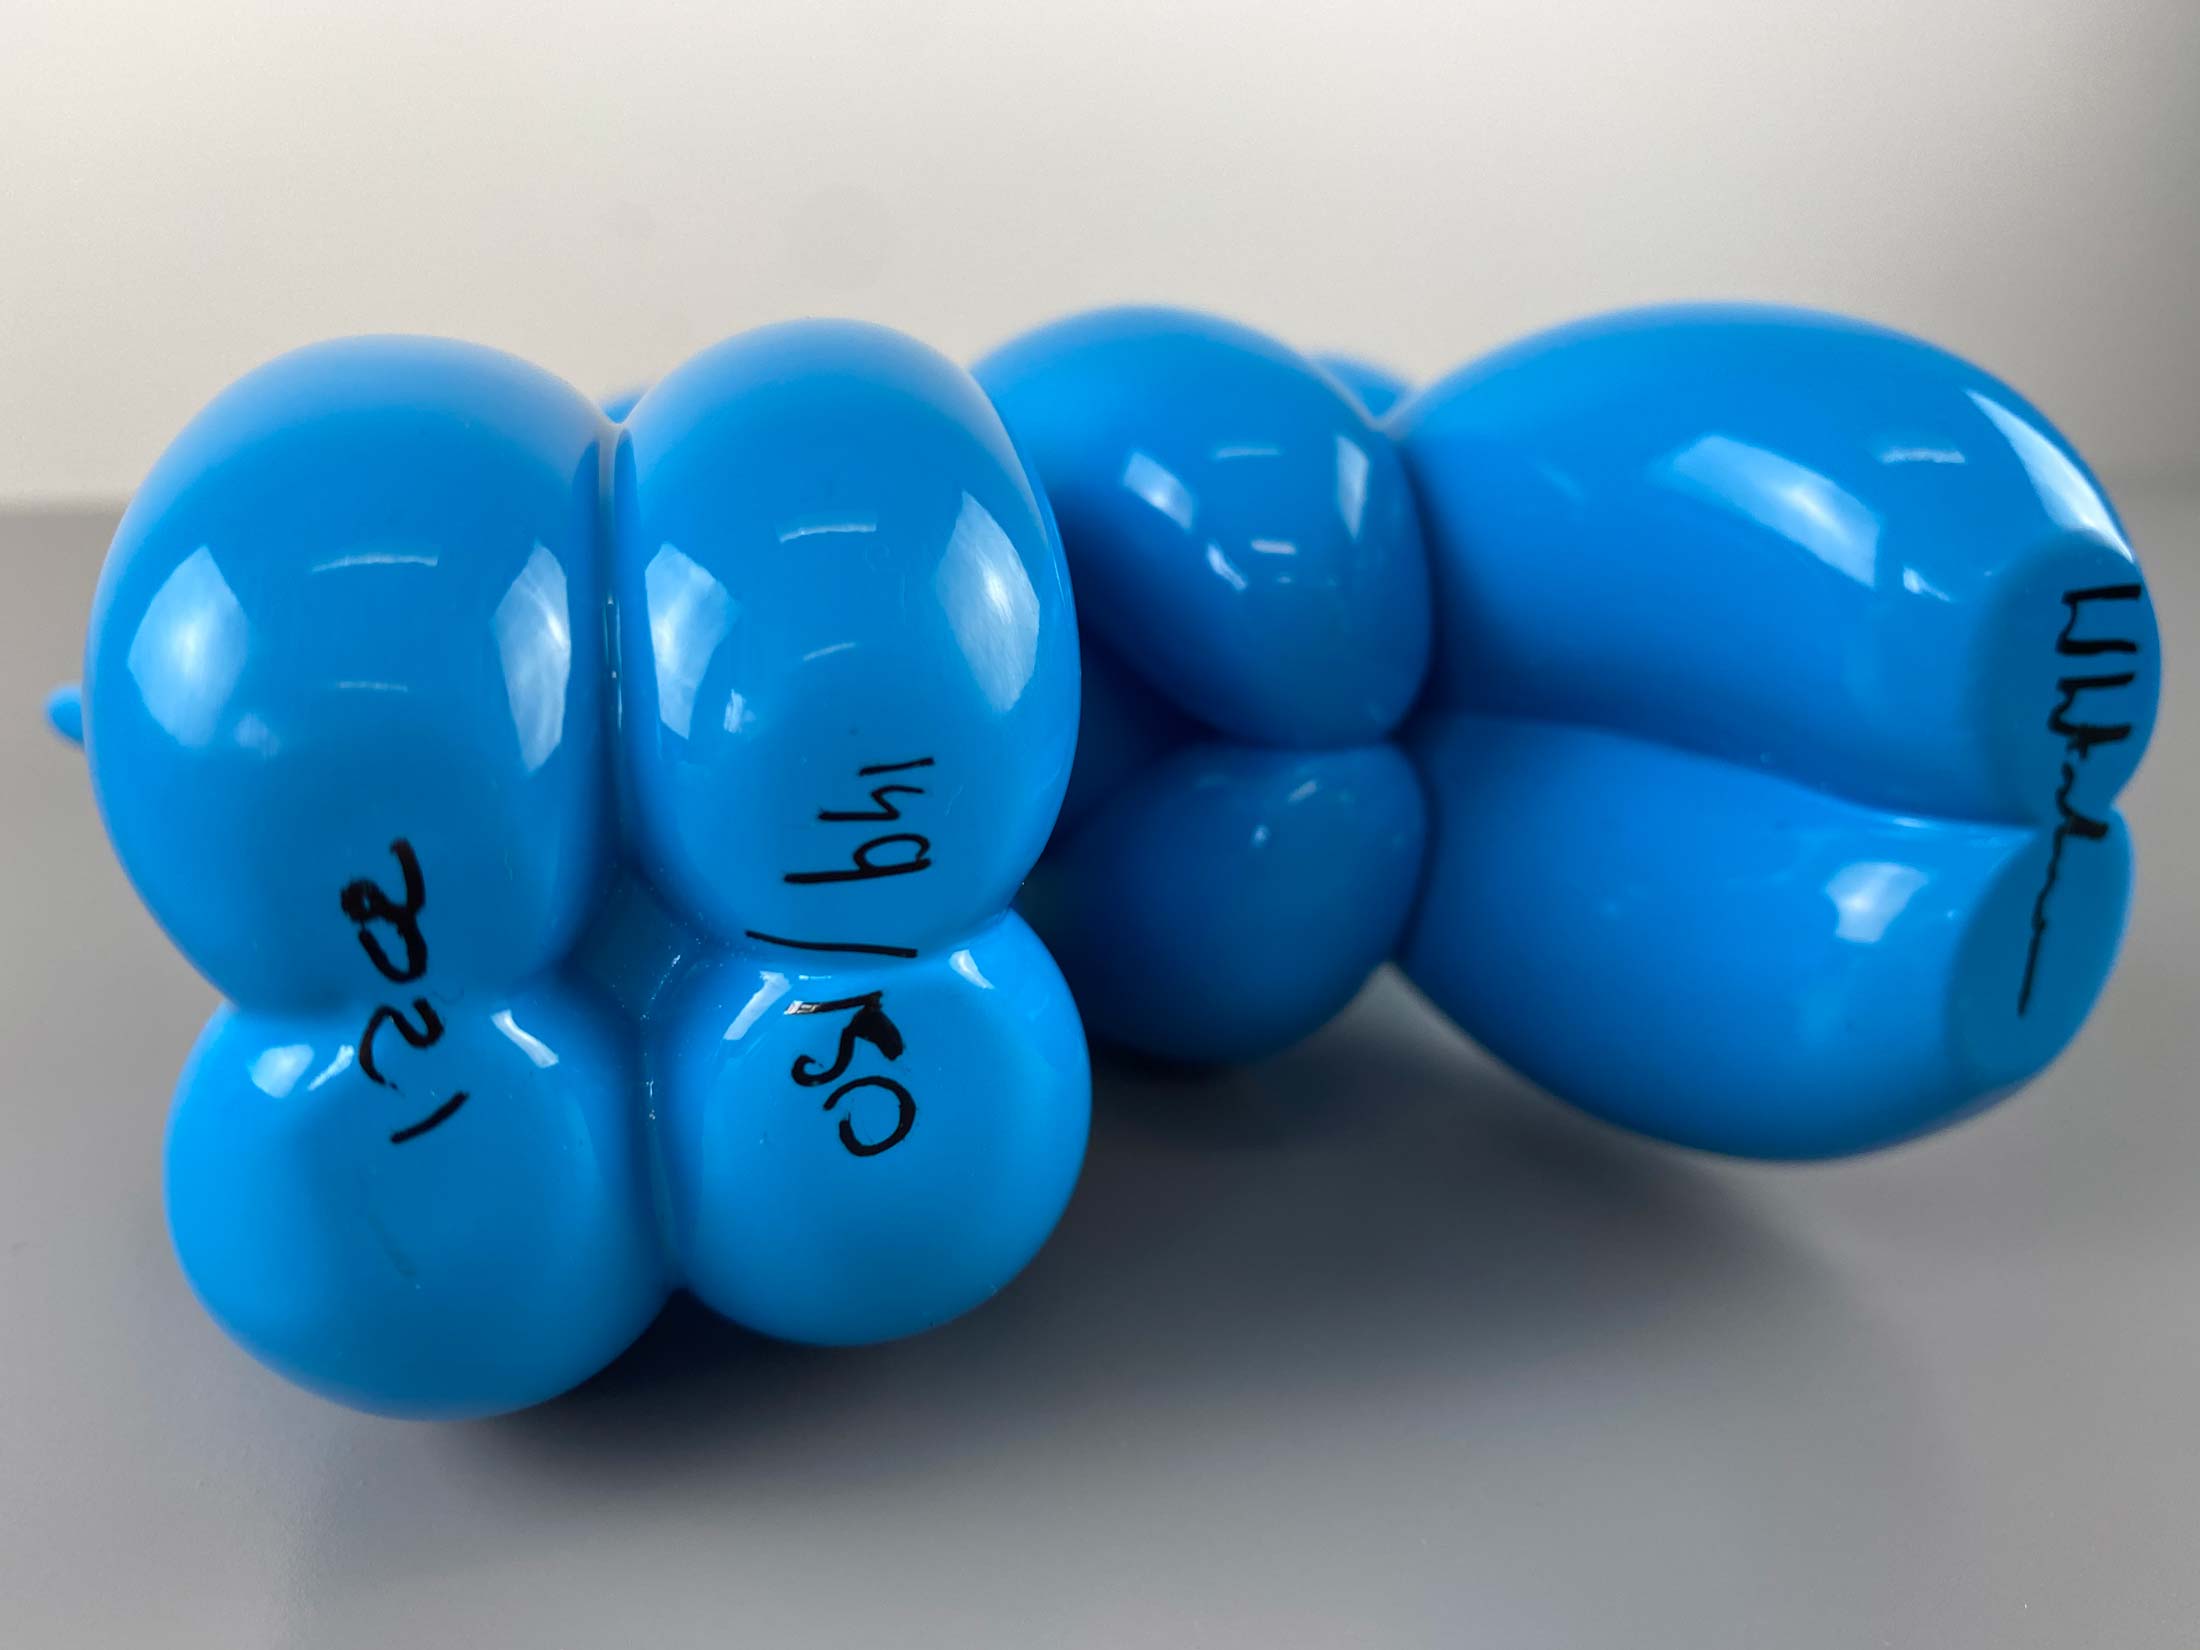 Humpek Mini Balloon Dog Sculpture (Blue), 2021 Enlarged